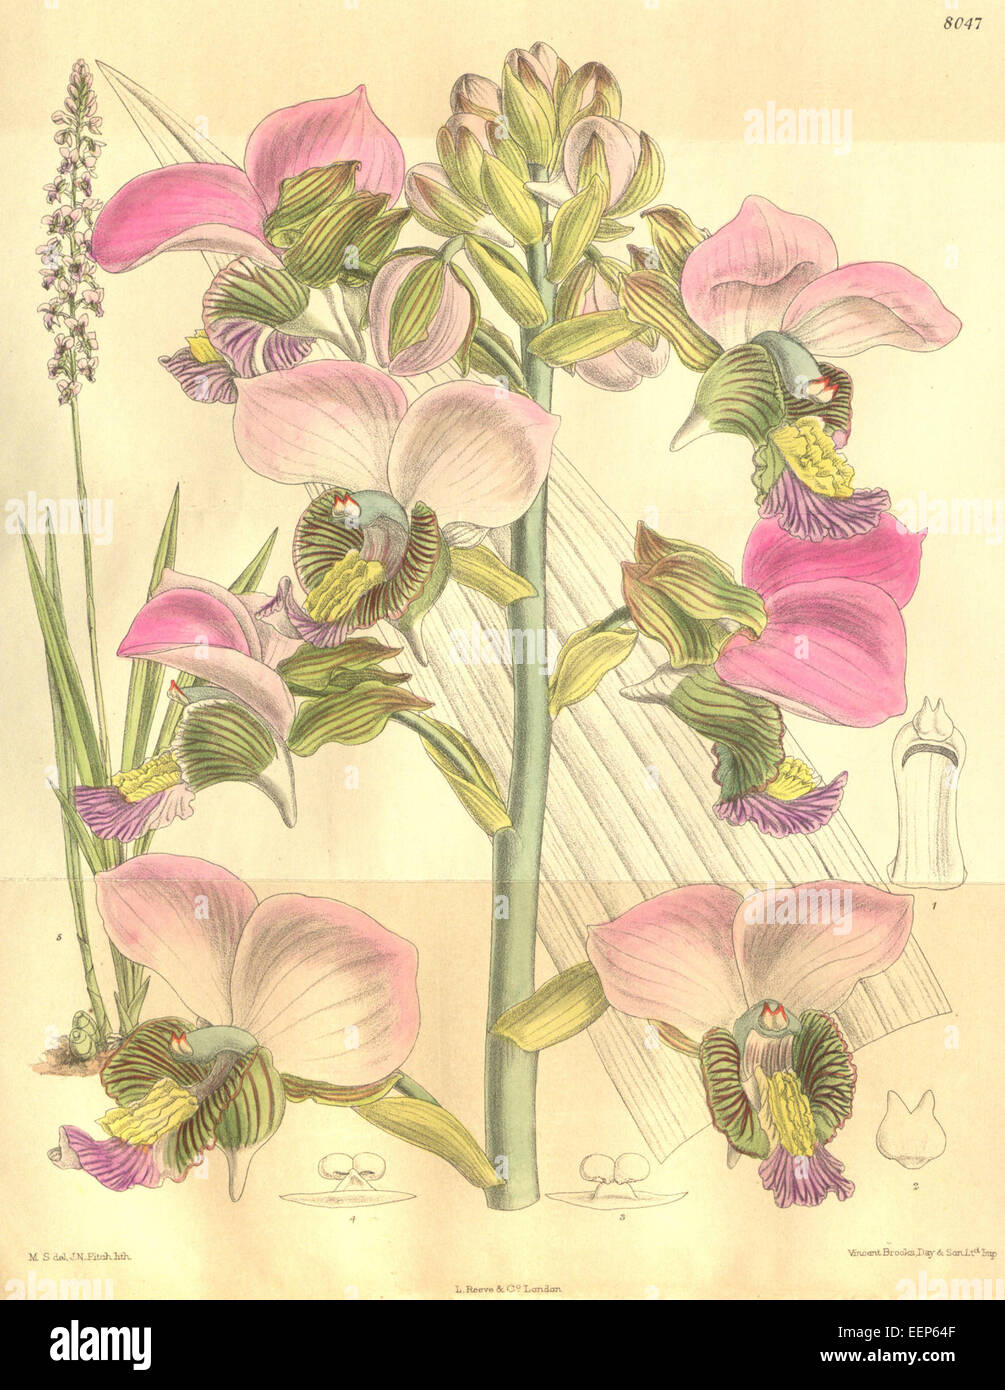 Eulophia rosea (as Lissochilus mahonii, spelled Lissochilus mahoni) - Curtis' 131 (Ser. 4 no. 1) pl. 8047 Stock Photo